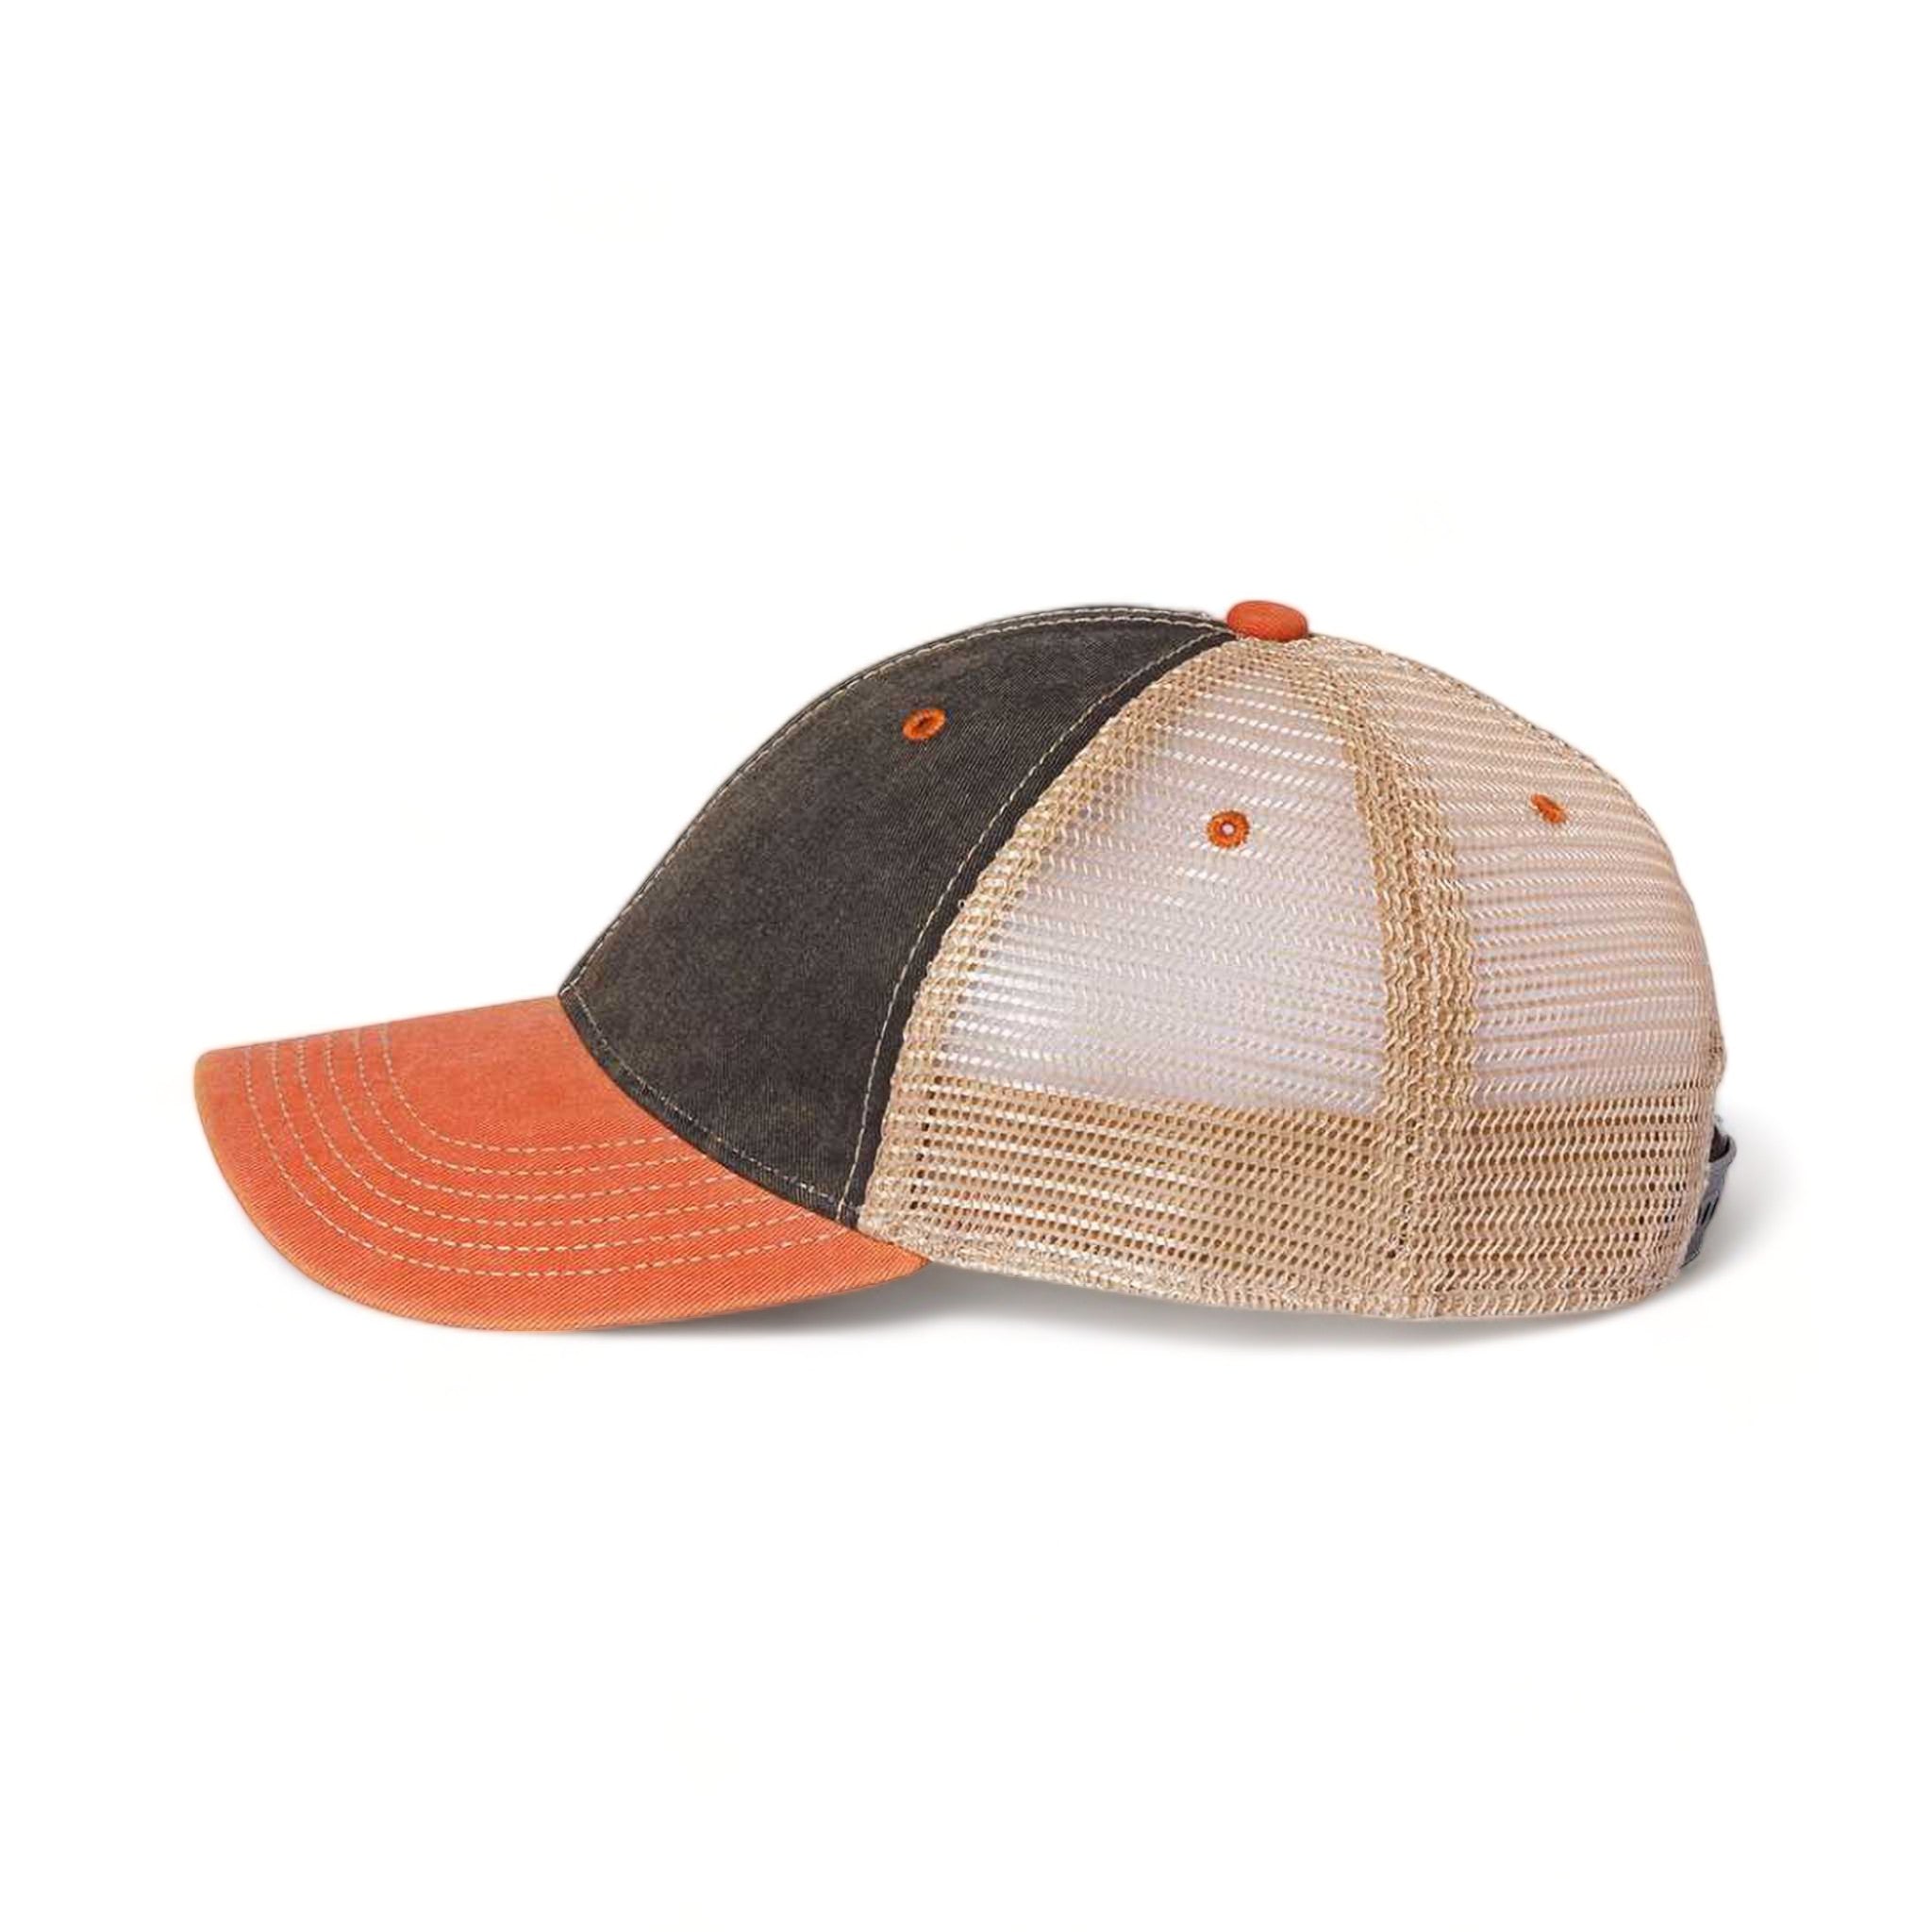 Side view of LEGACY OFA custom hat in black, orange and khaki